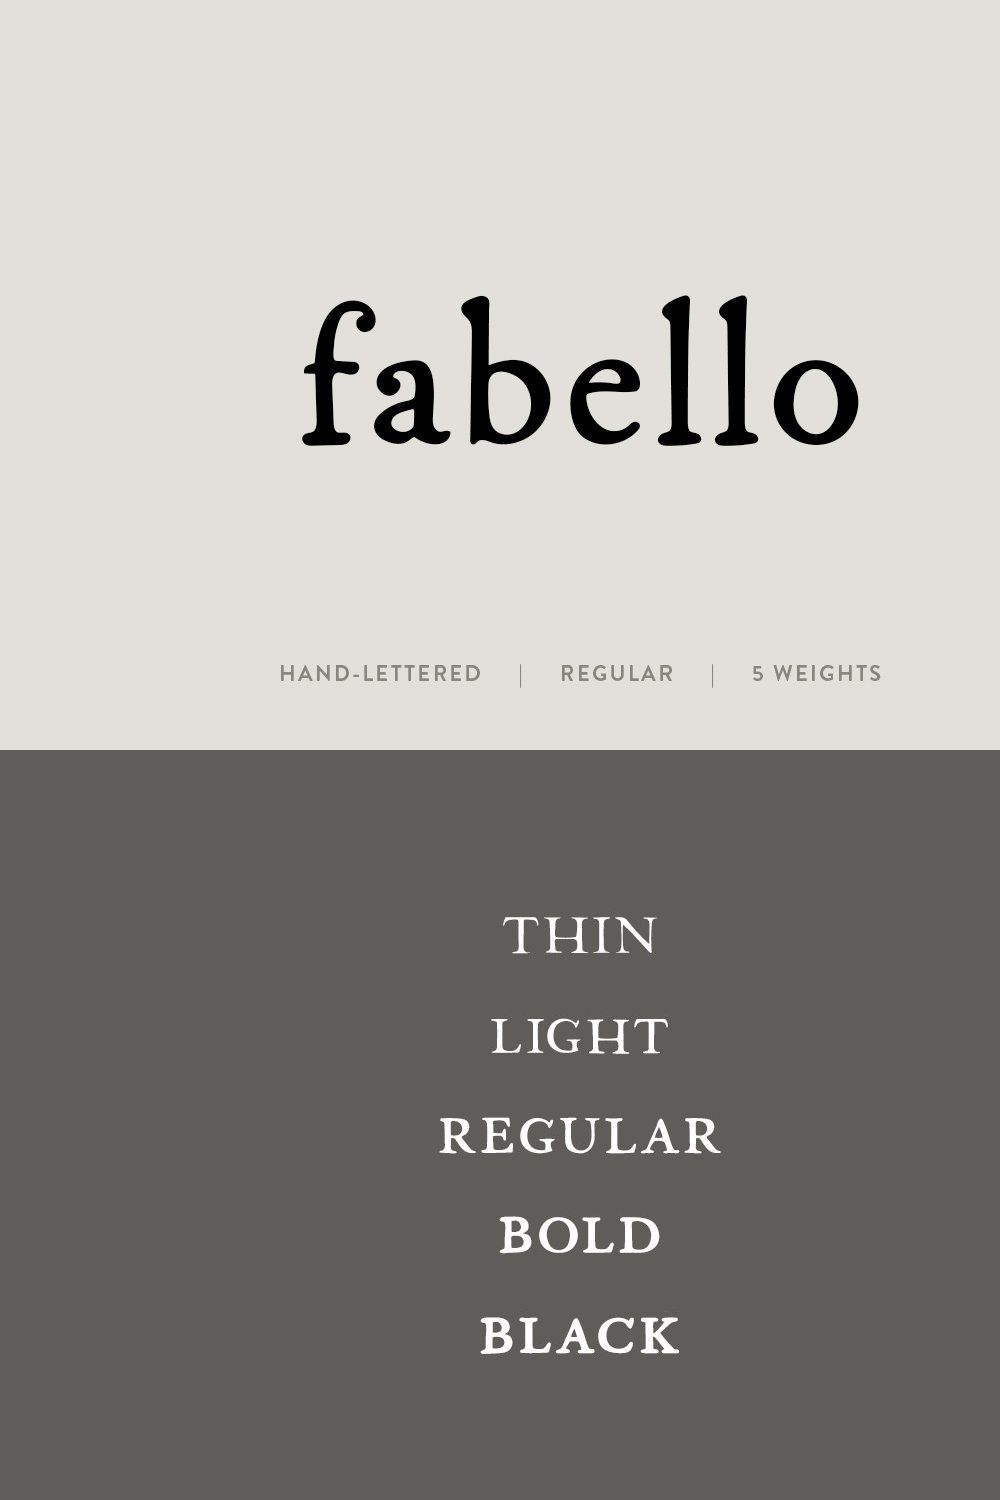 Fabello Regular / hand lettered font pinterest preview image.